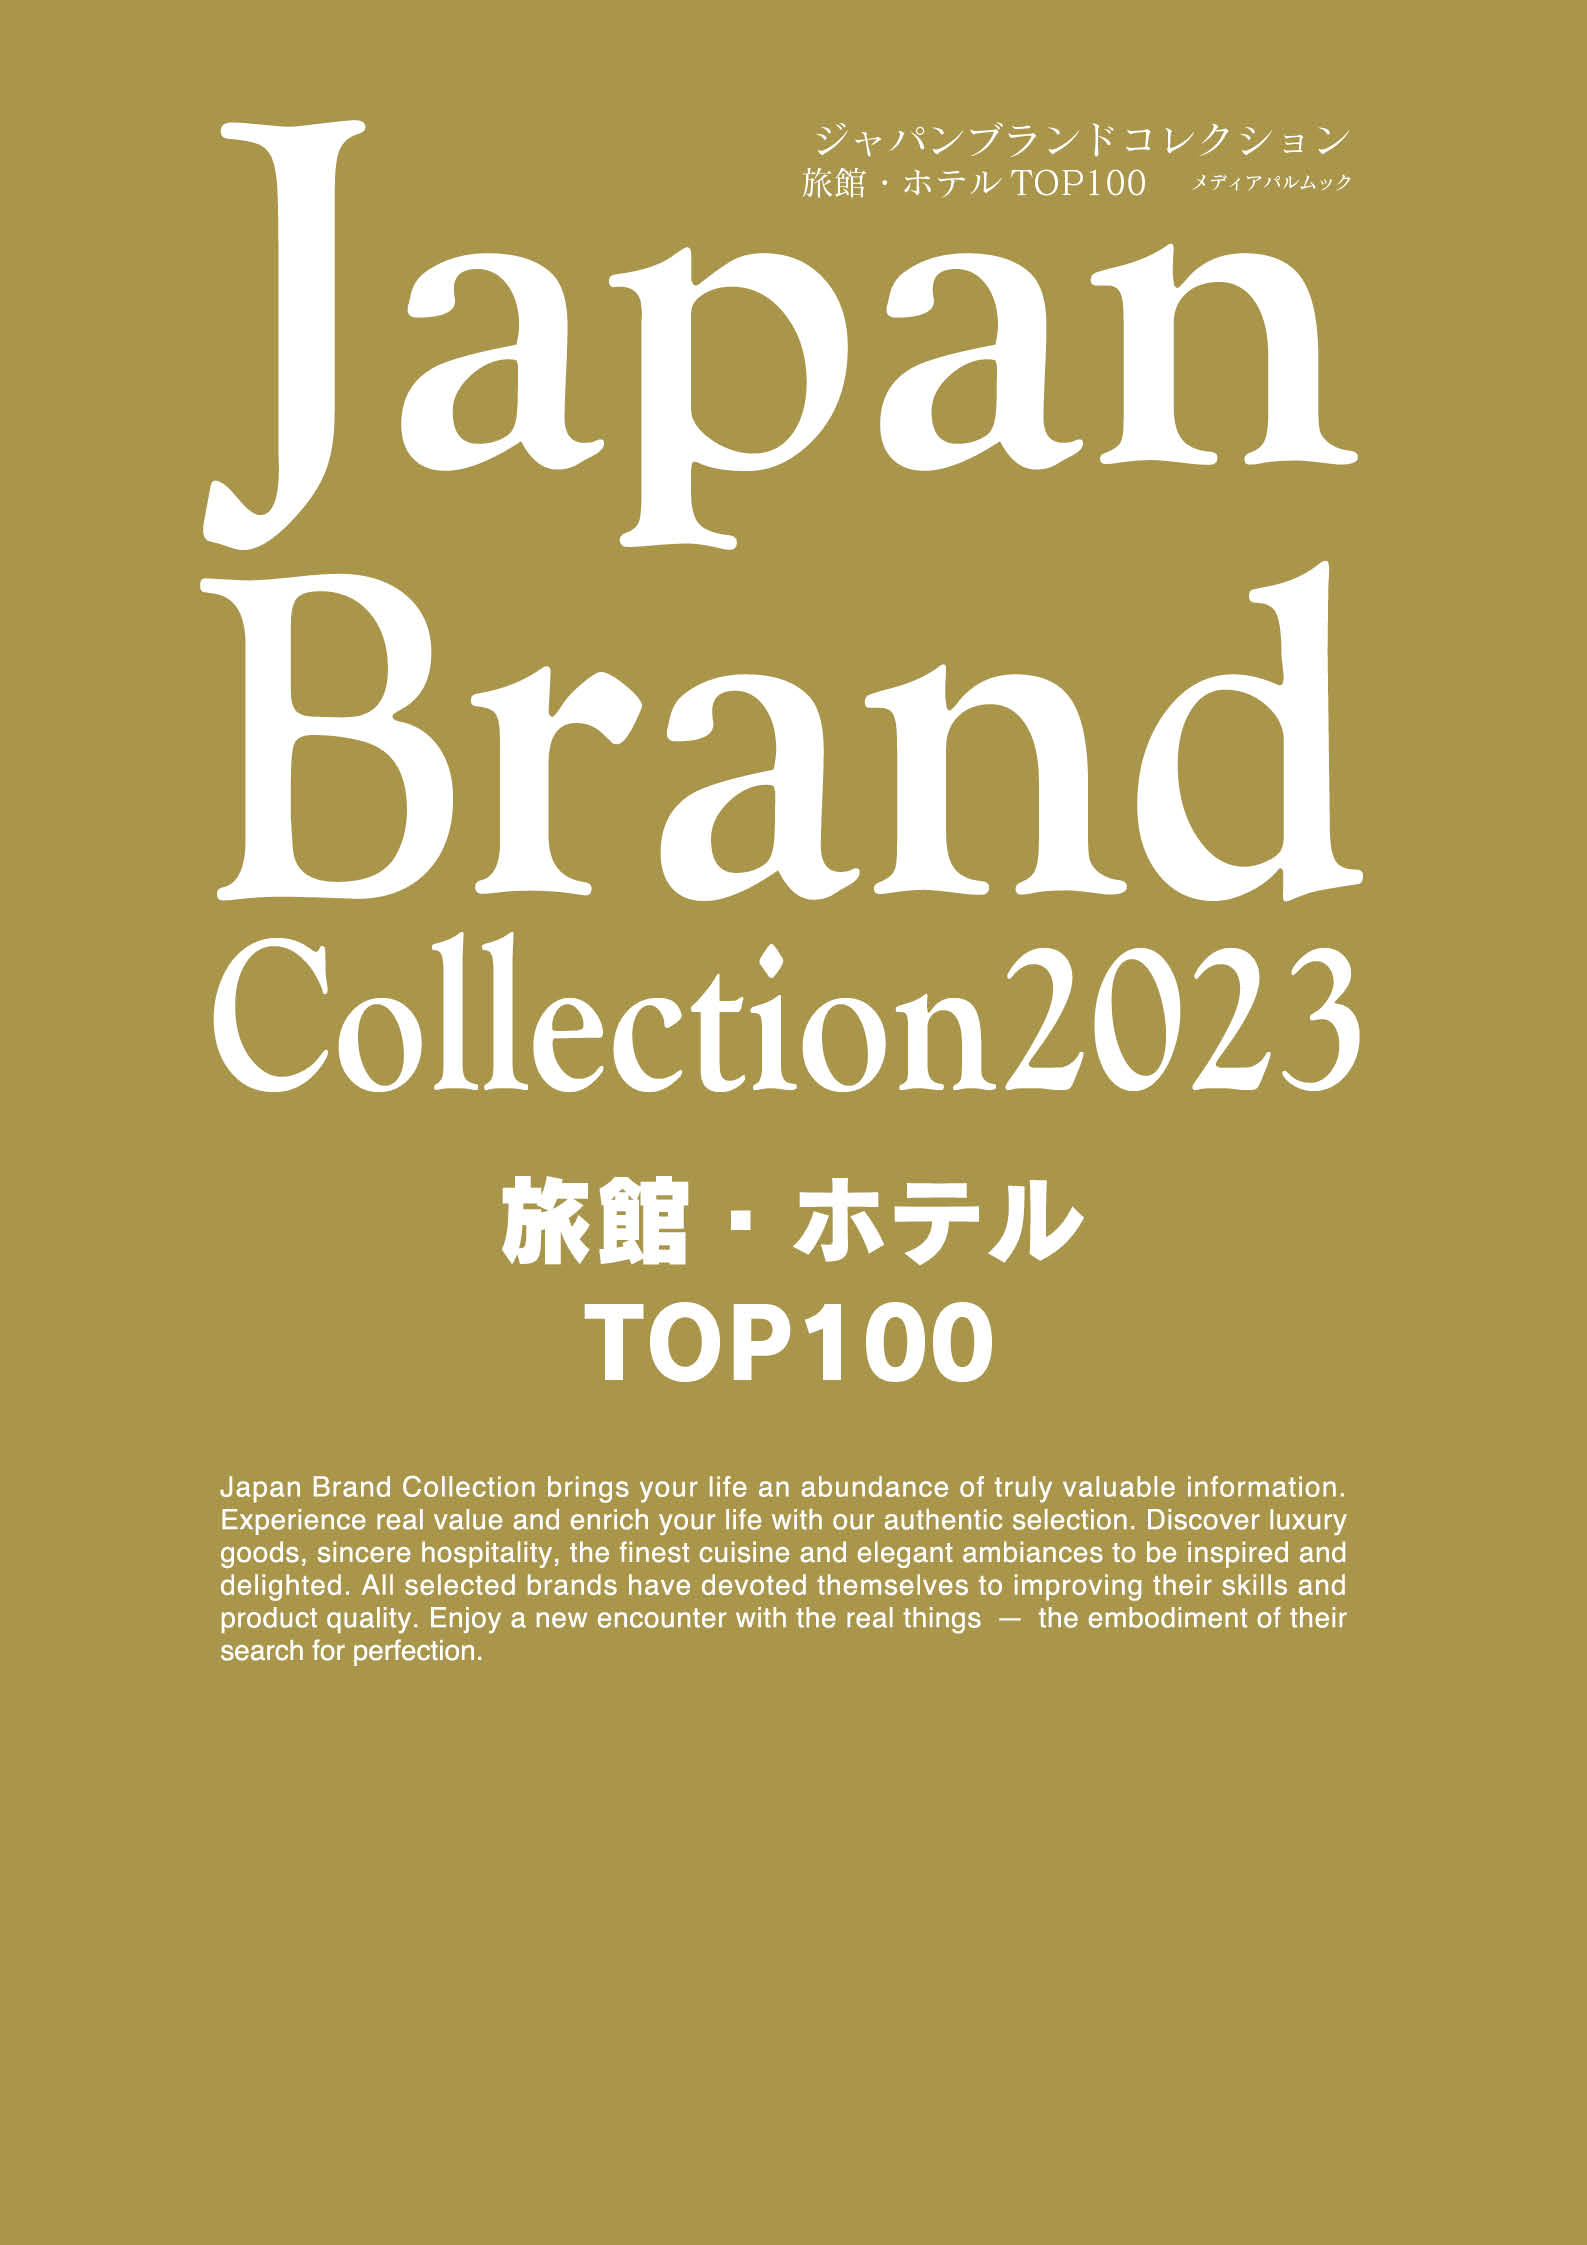 Japan Brand Collection2023 旅館・ホテル TOP100